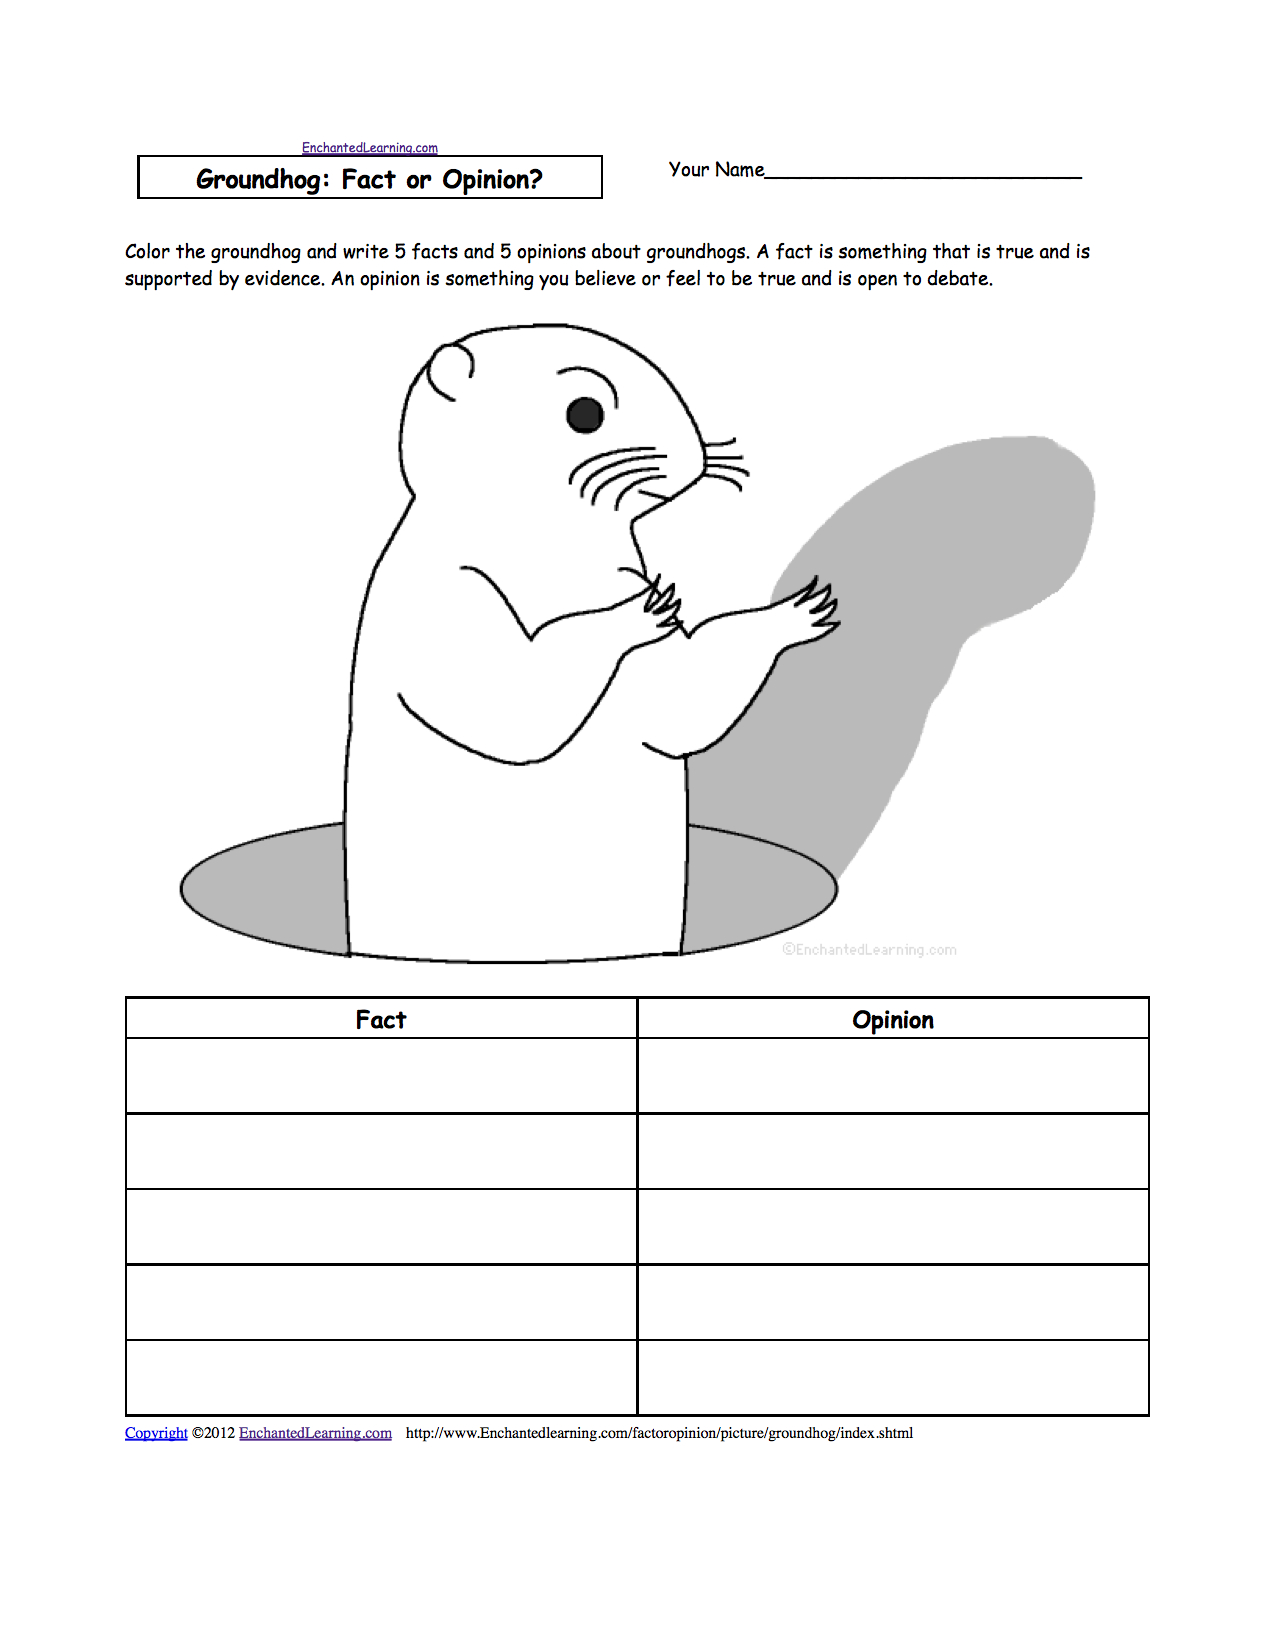 Groundhog Day Crafts, Worksheets And Printable Books - Free Printable Groundhog Day Reading Comprehension Worksheets